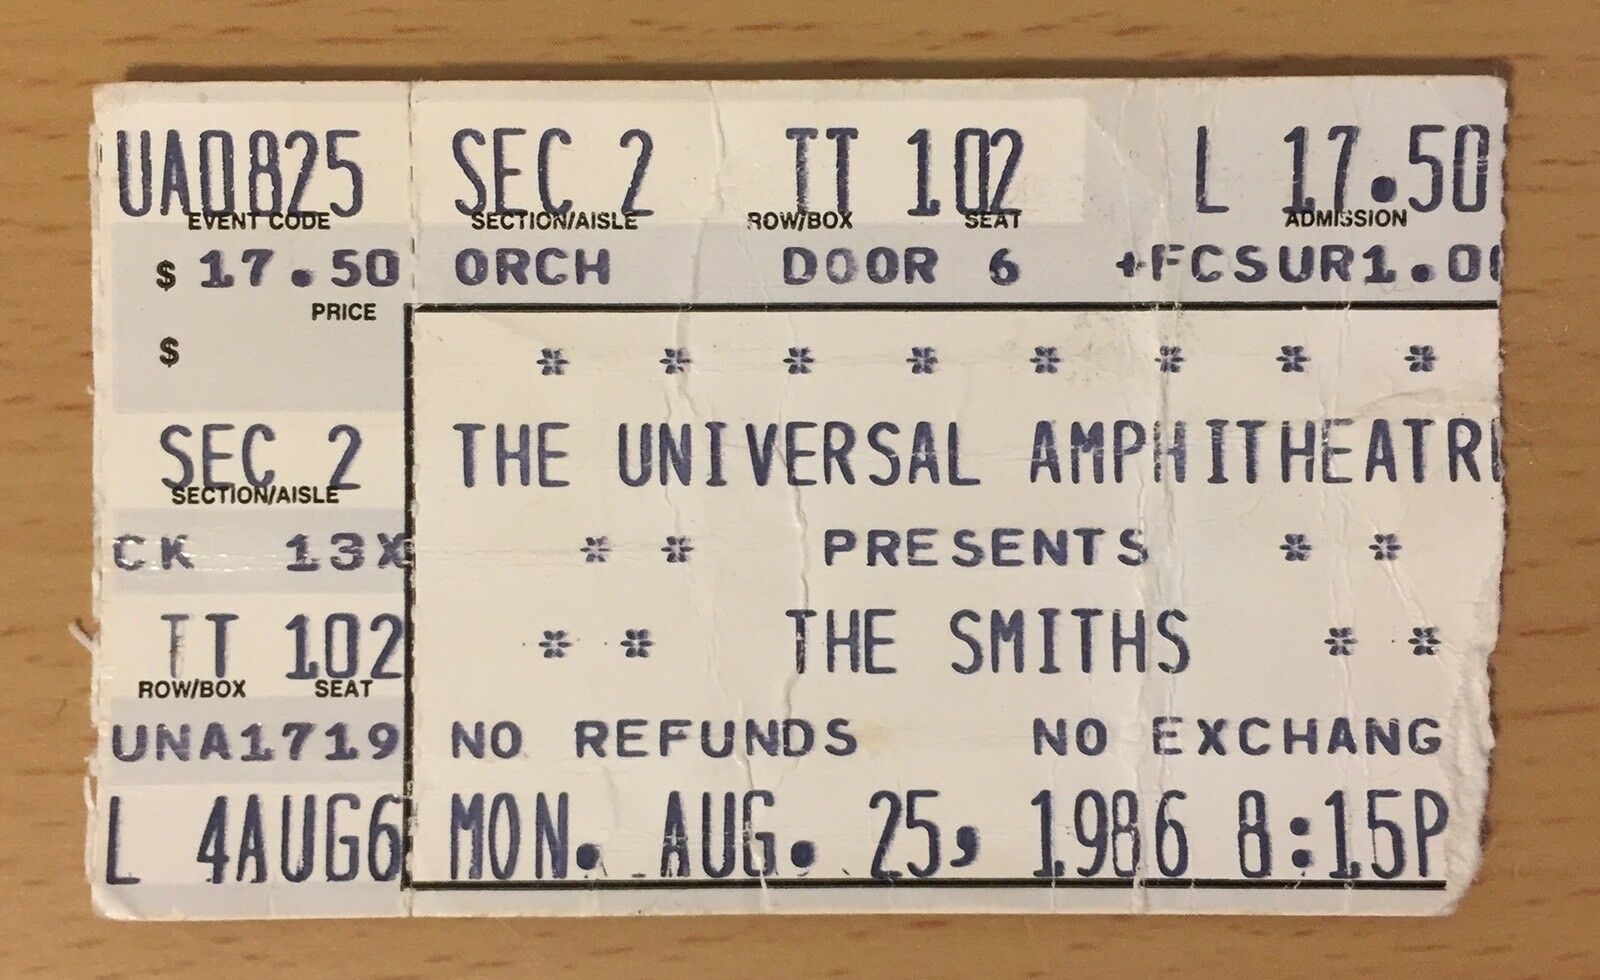 1986 THE SMITHS LOS ANGELES CONCERT TICKET STUB MORRISSEY QUEEN IS DEAD TOUR 102